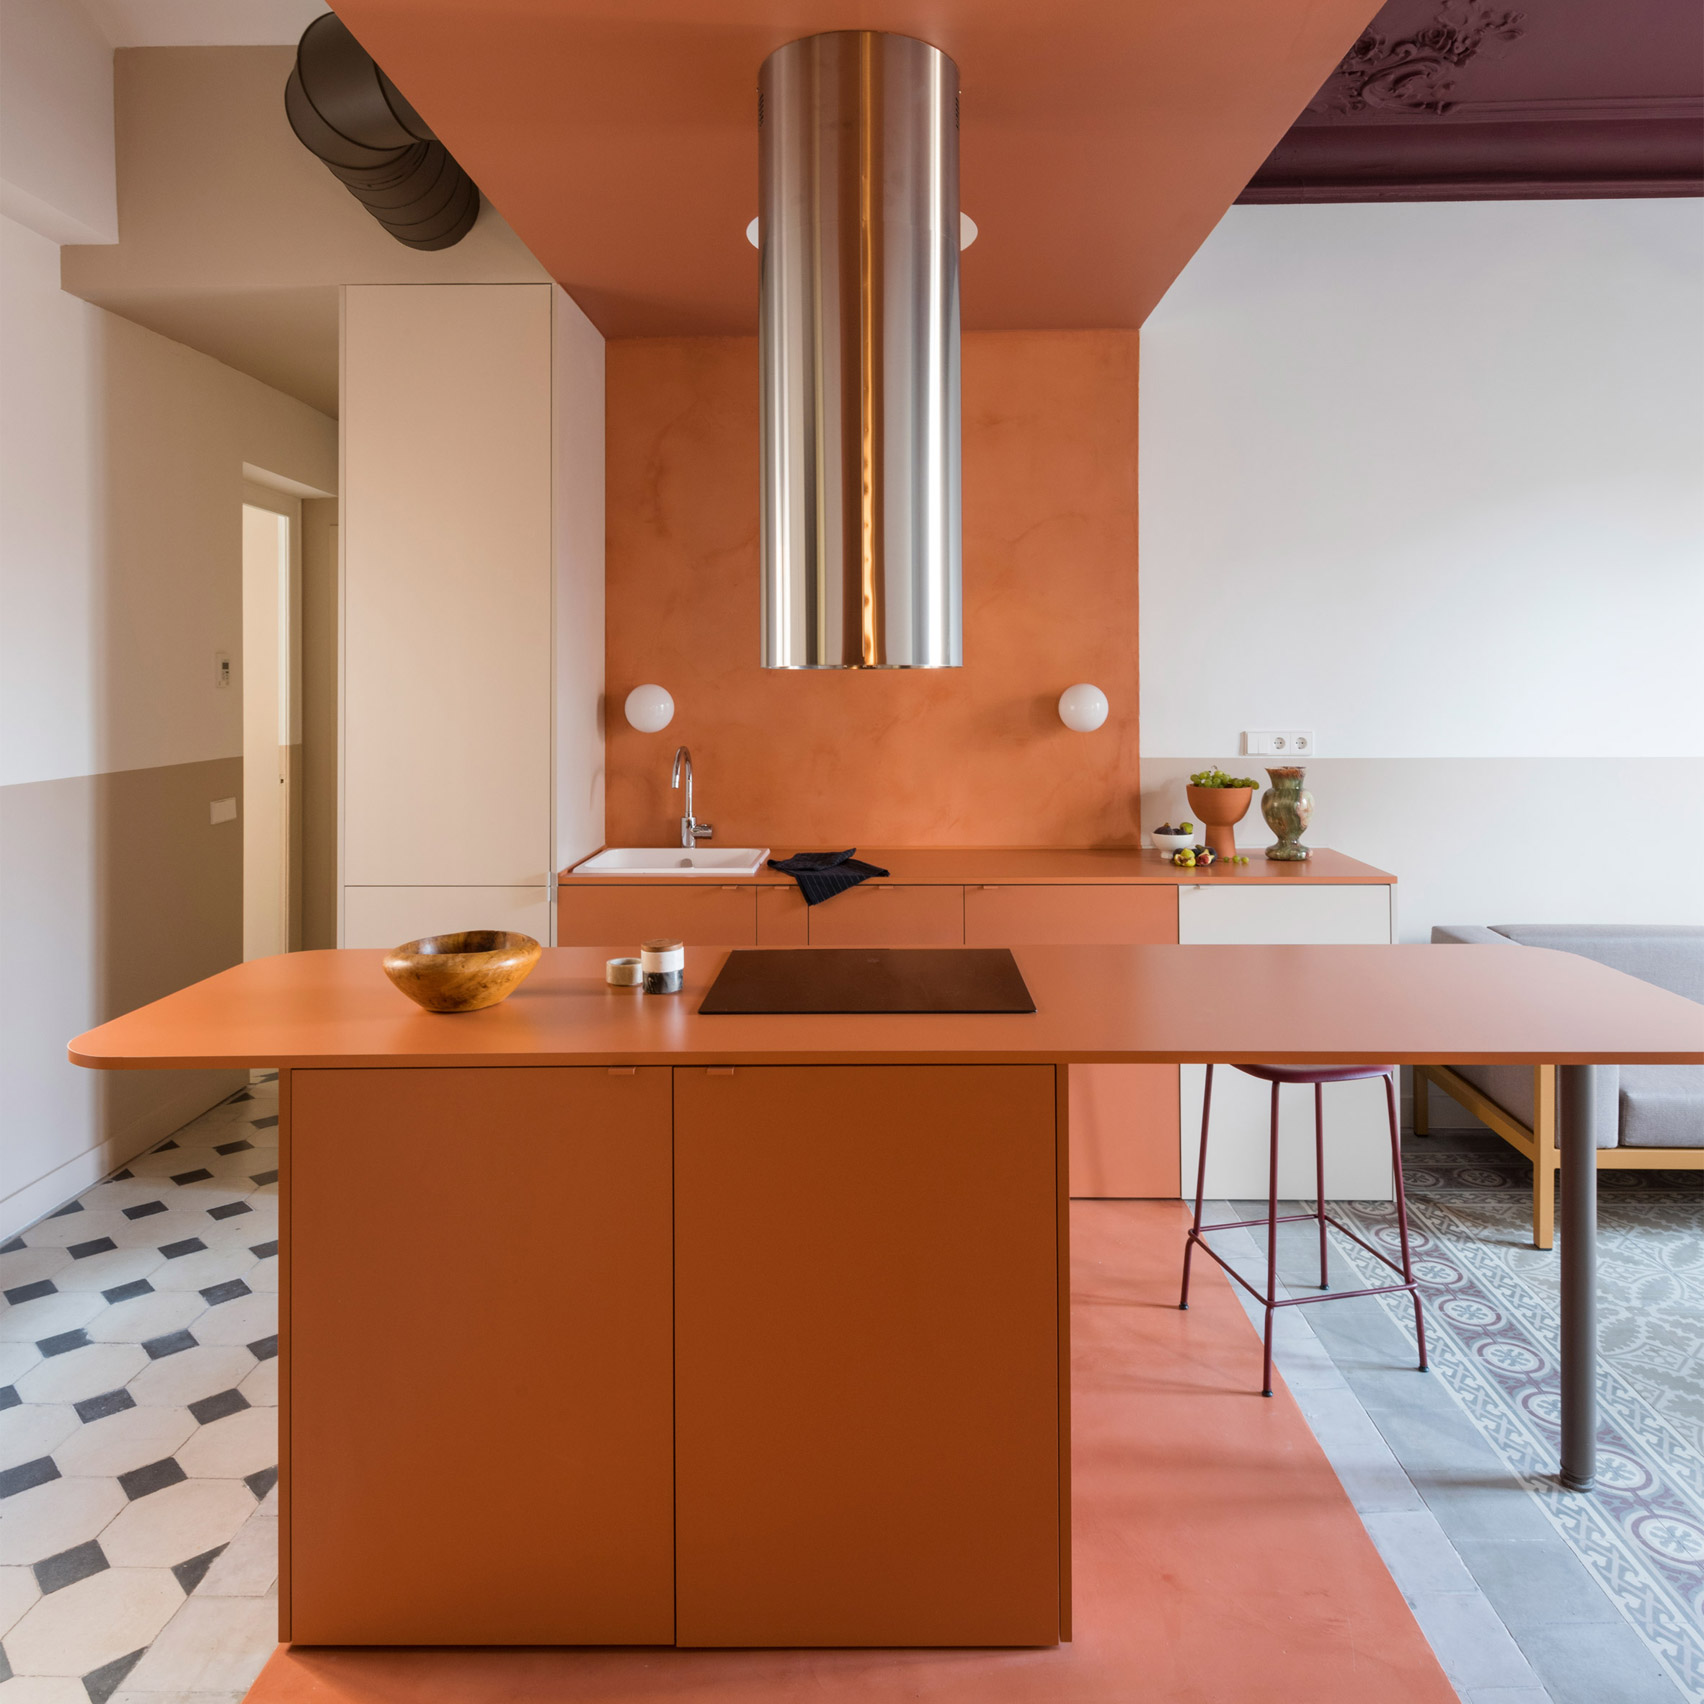 Terracotta-coloured kitchen and breakfast bar